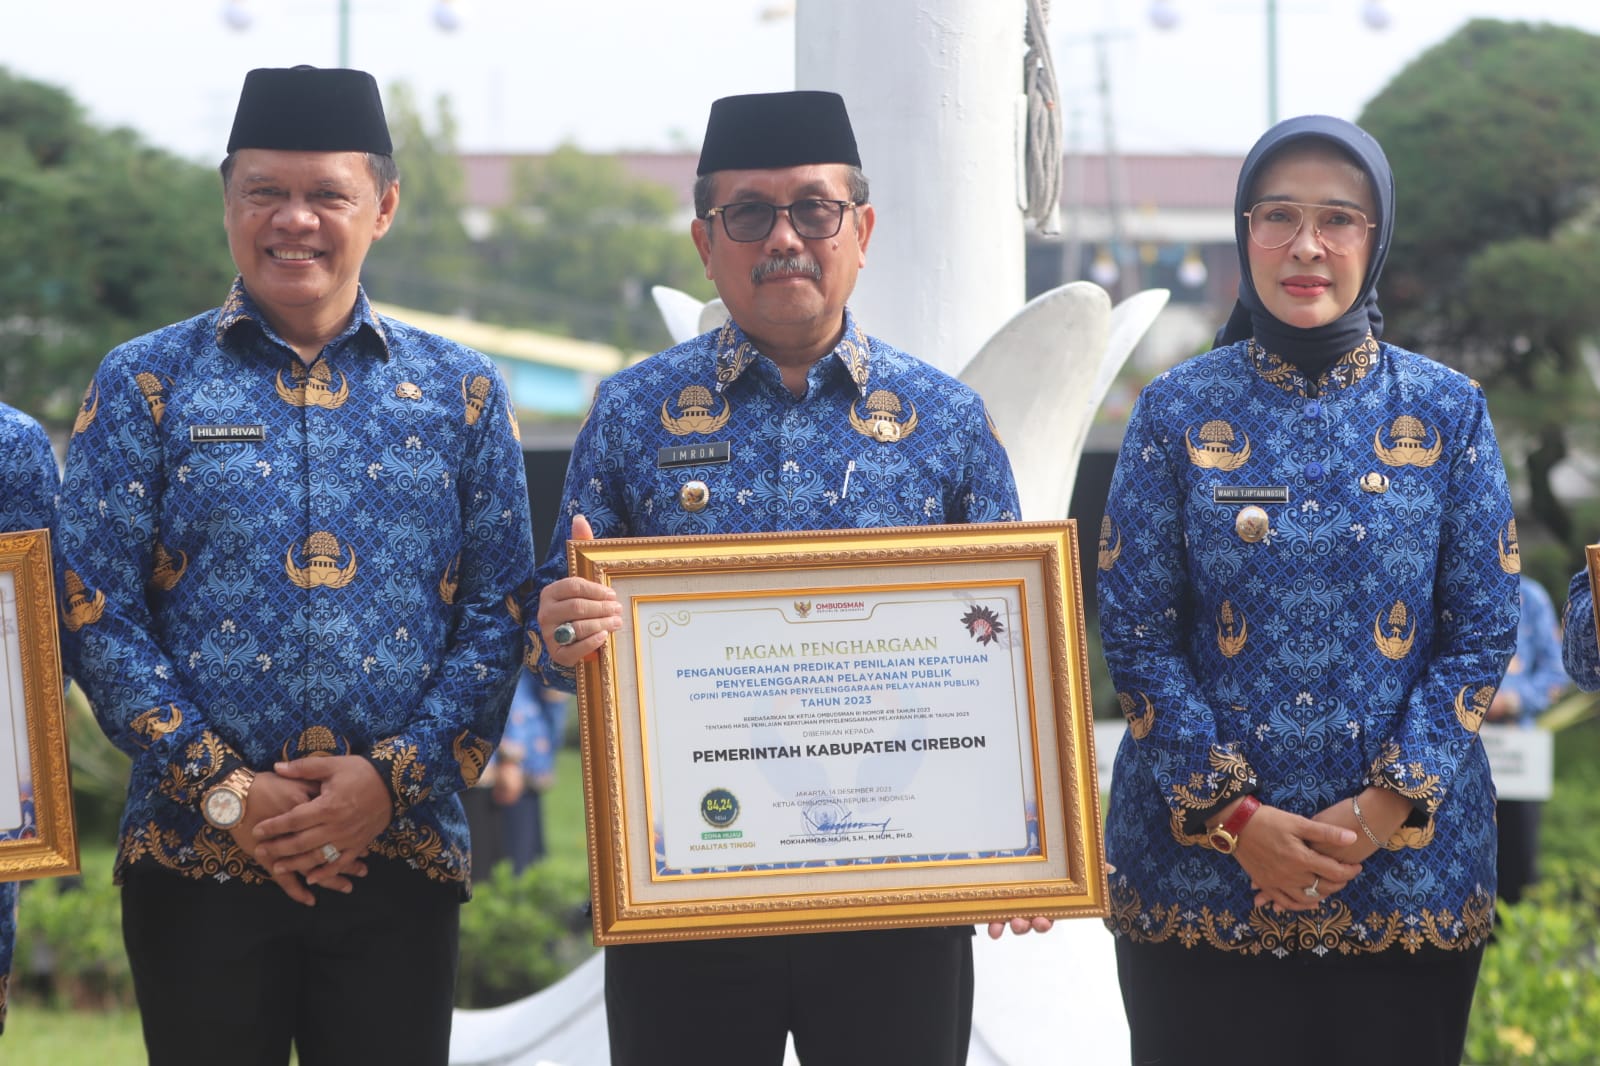 Bupati Imron: Indeks Pelayanan Publik di Kabupaten Cirebon Meningkat